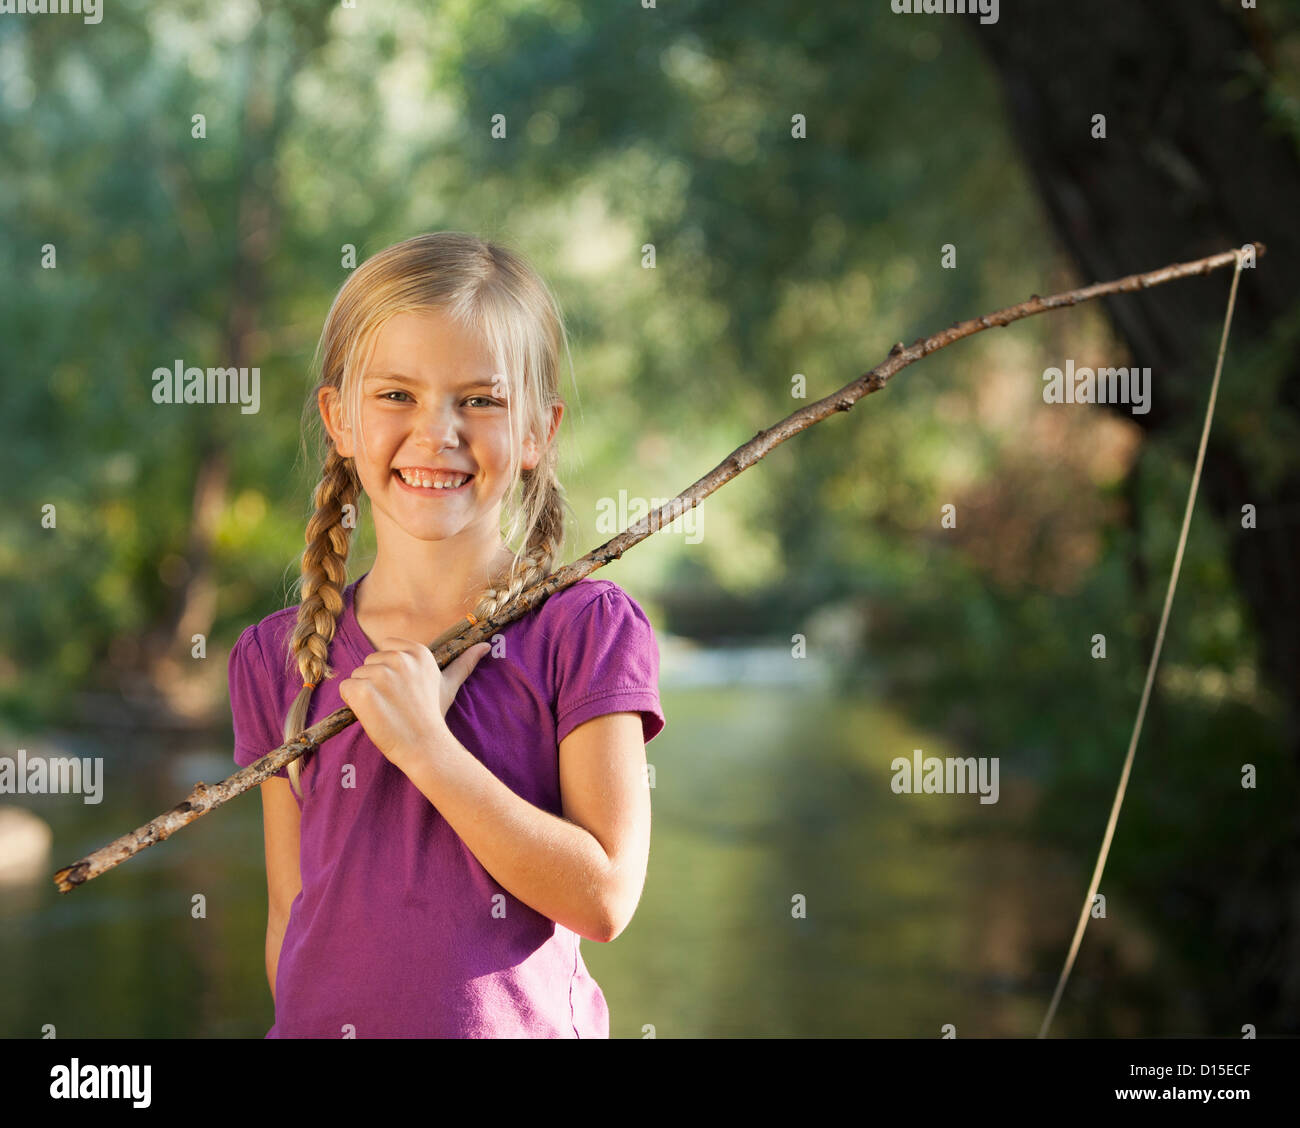 https://c8.alamy.com/comp/D15ECF/usa-utah-lehi-little-girl-4-5-holding-wooden-stick-fishing-pole-D15ECF.jpg